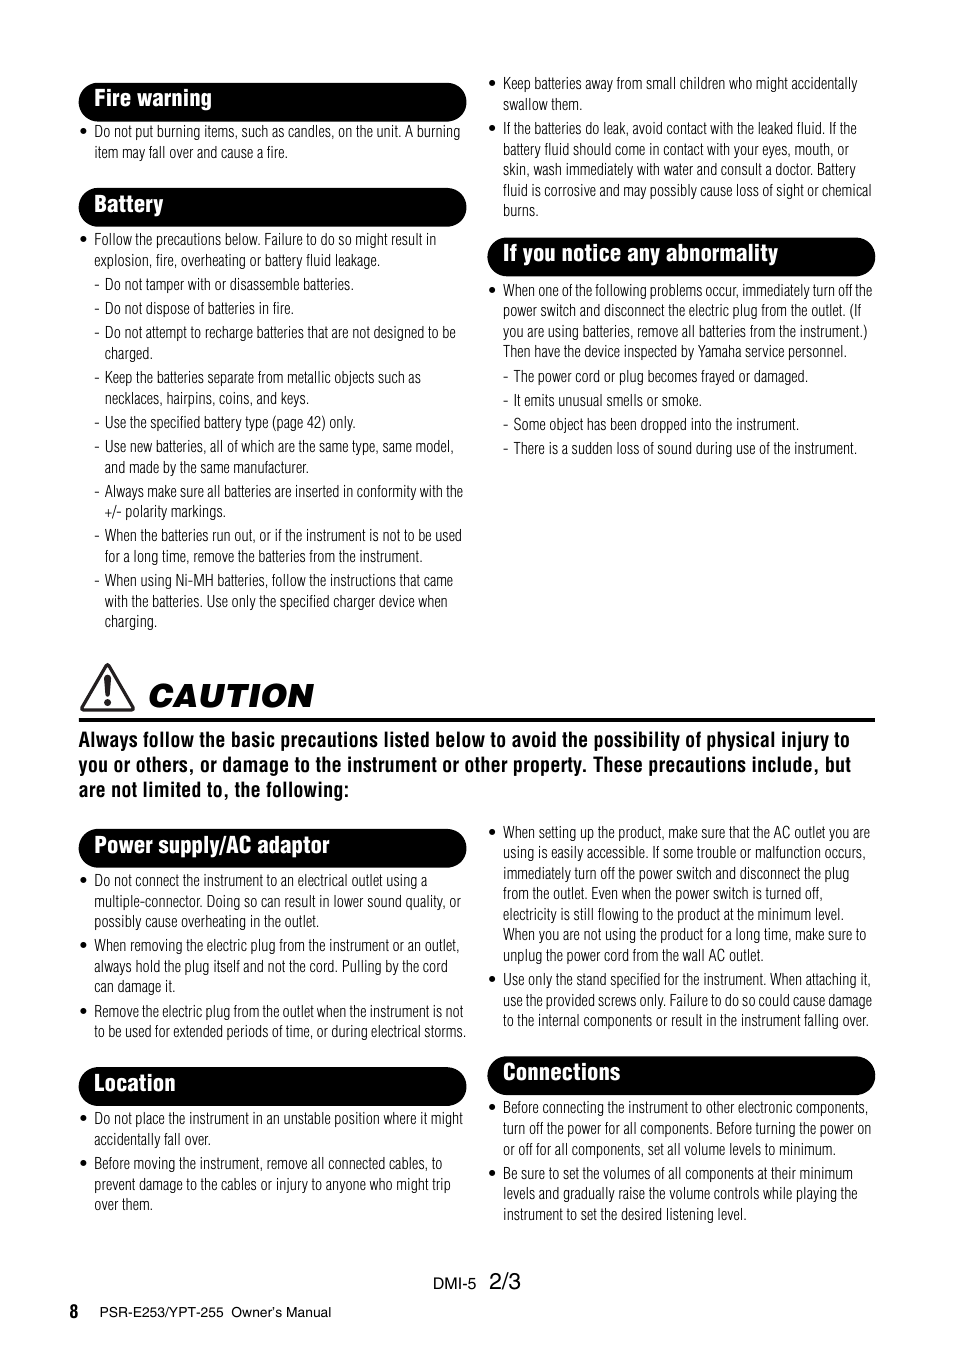 Caution | Yamaha PSR-E253 User Manual | Page 8 / 48